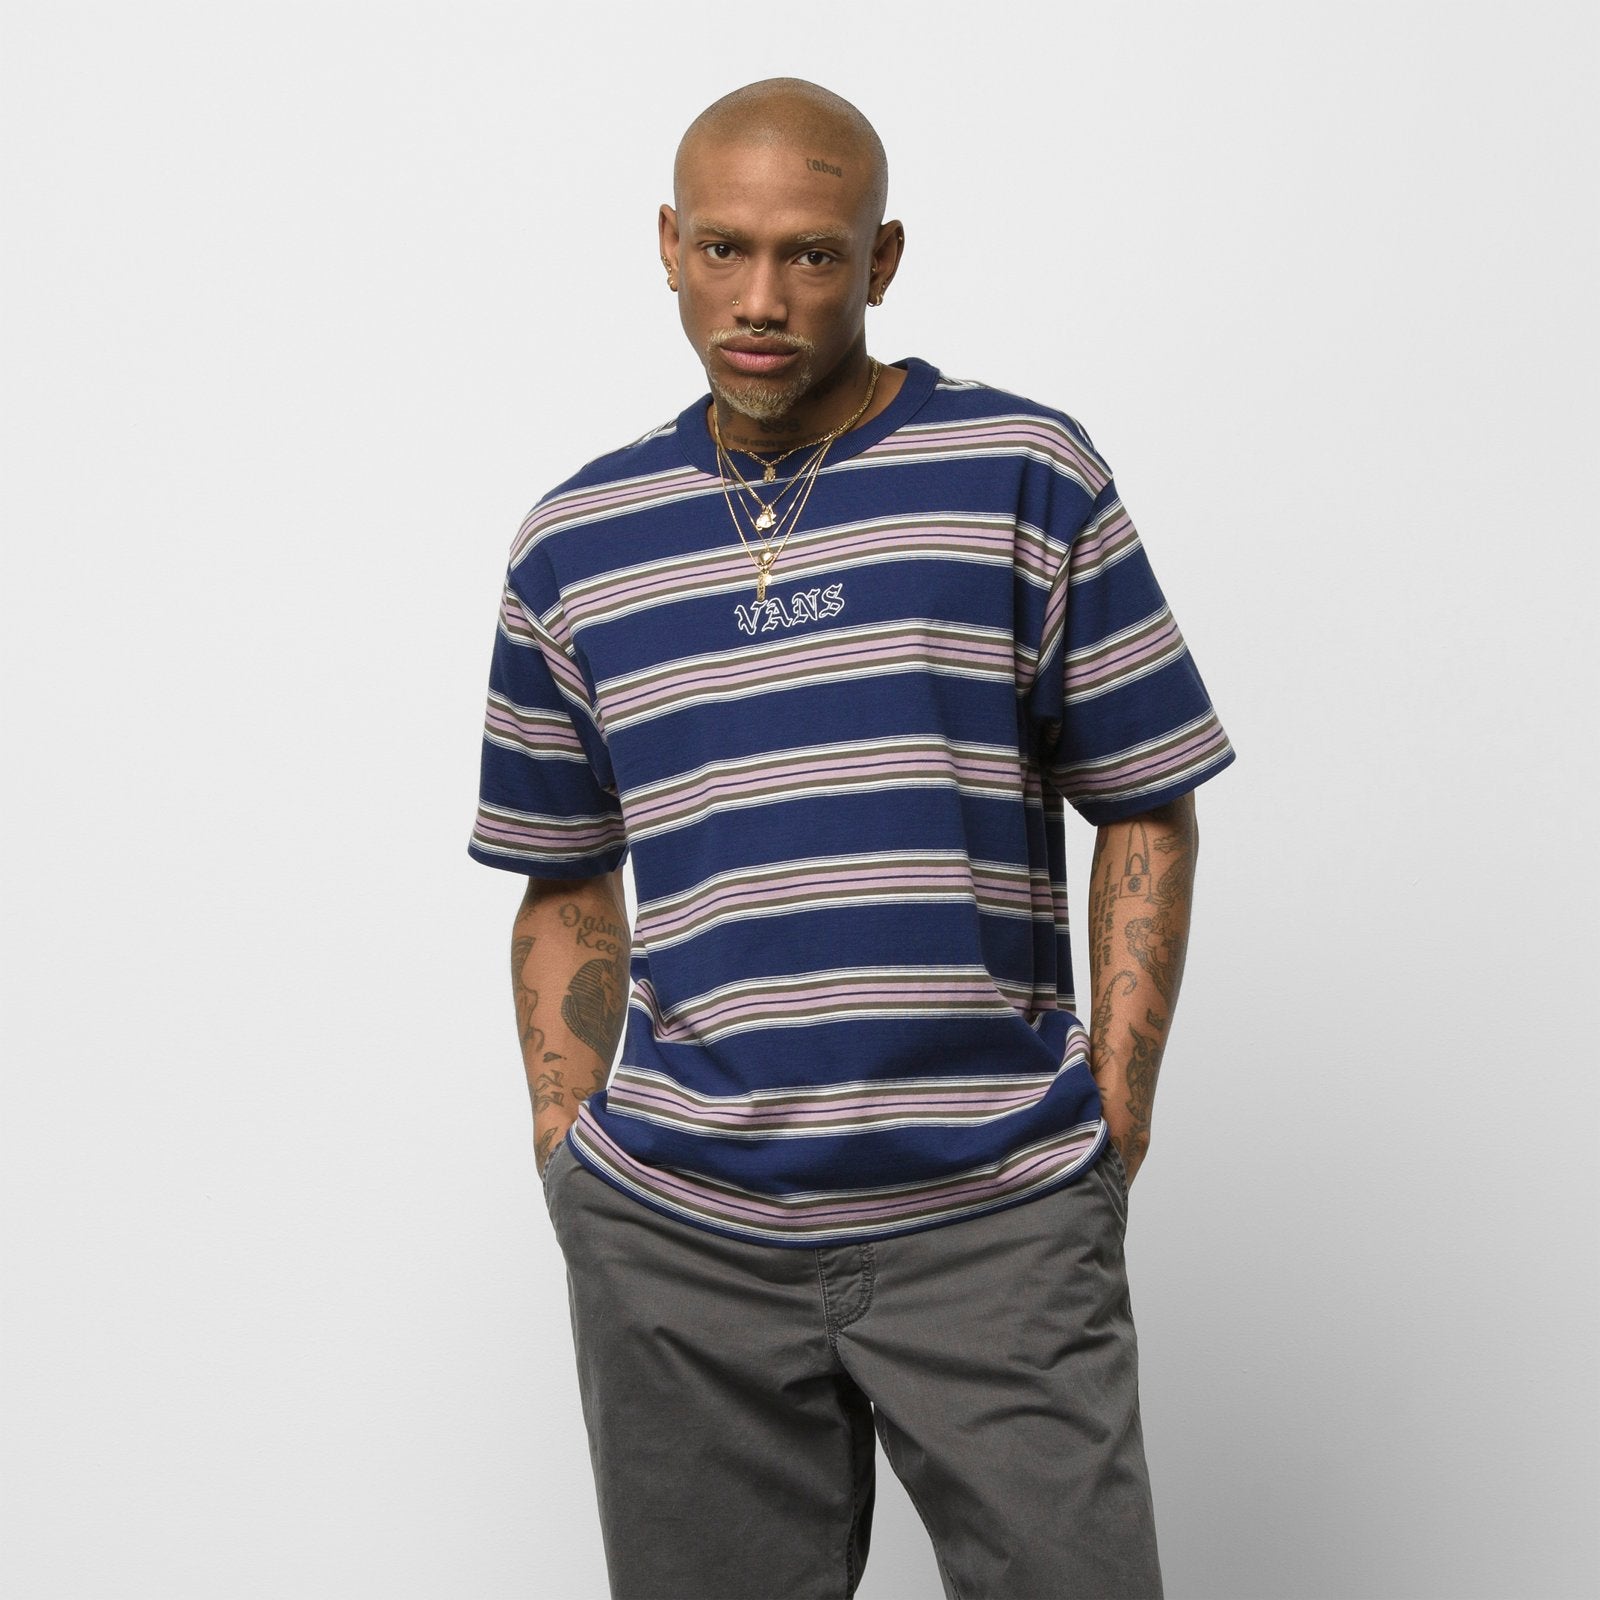 Dress Blues Wilson Knit Vans Striped T-Shirt